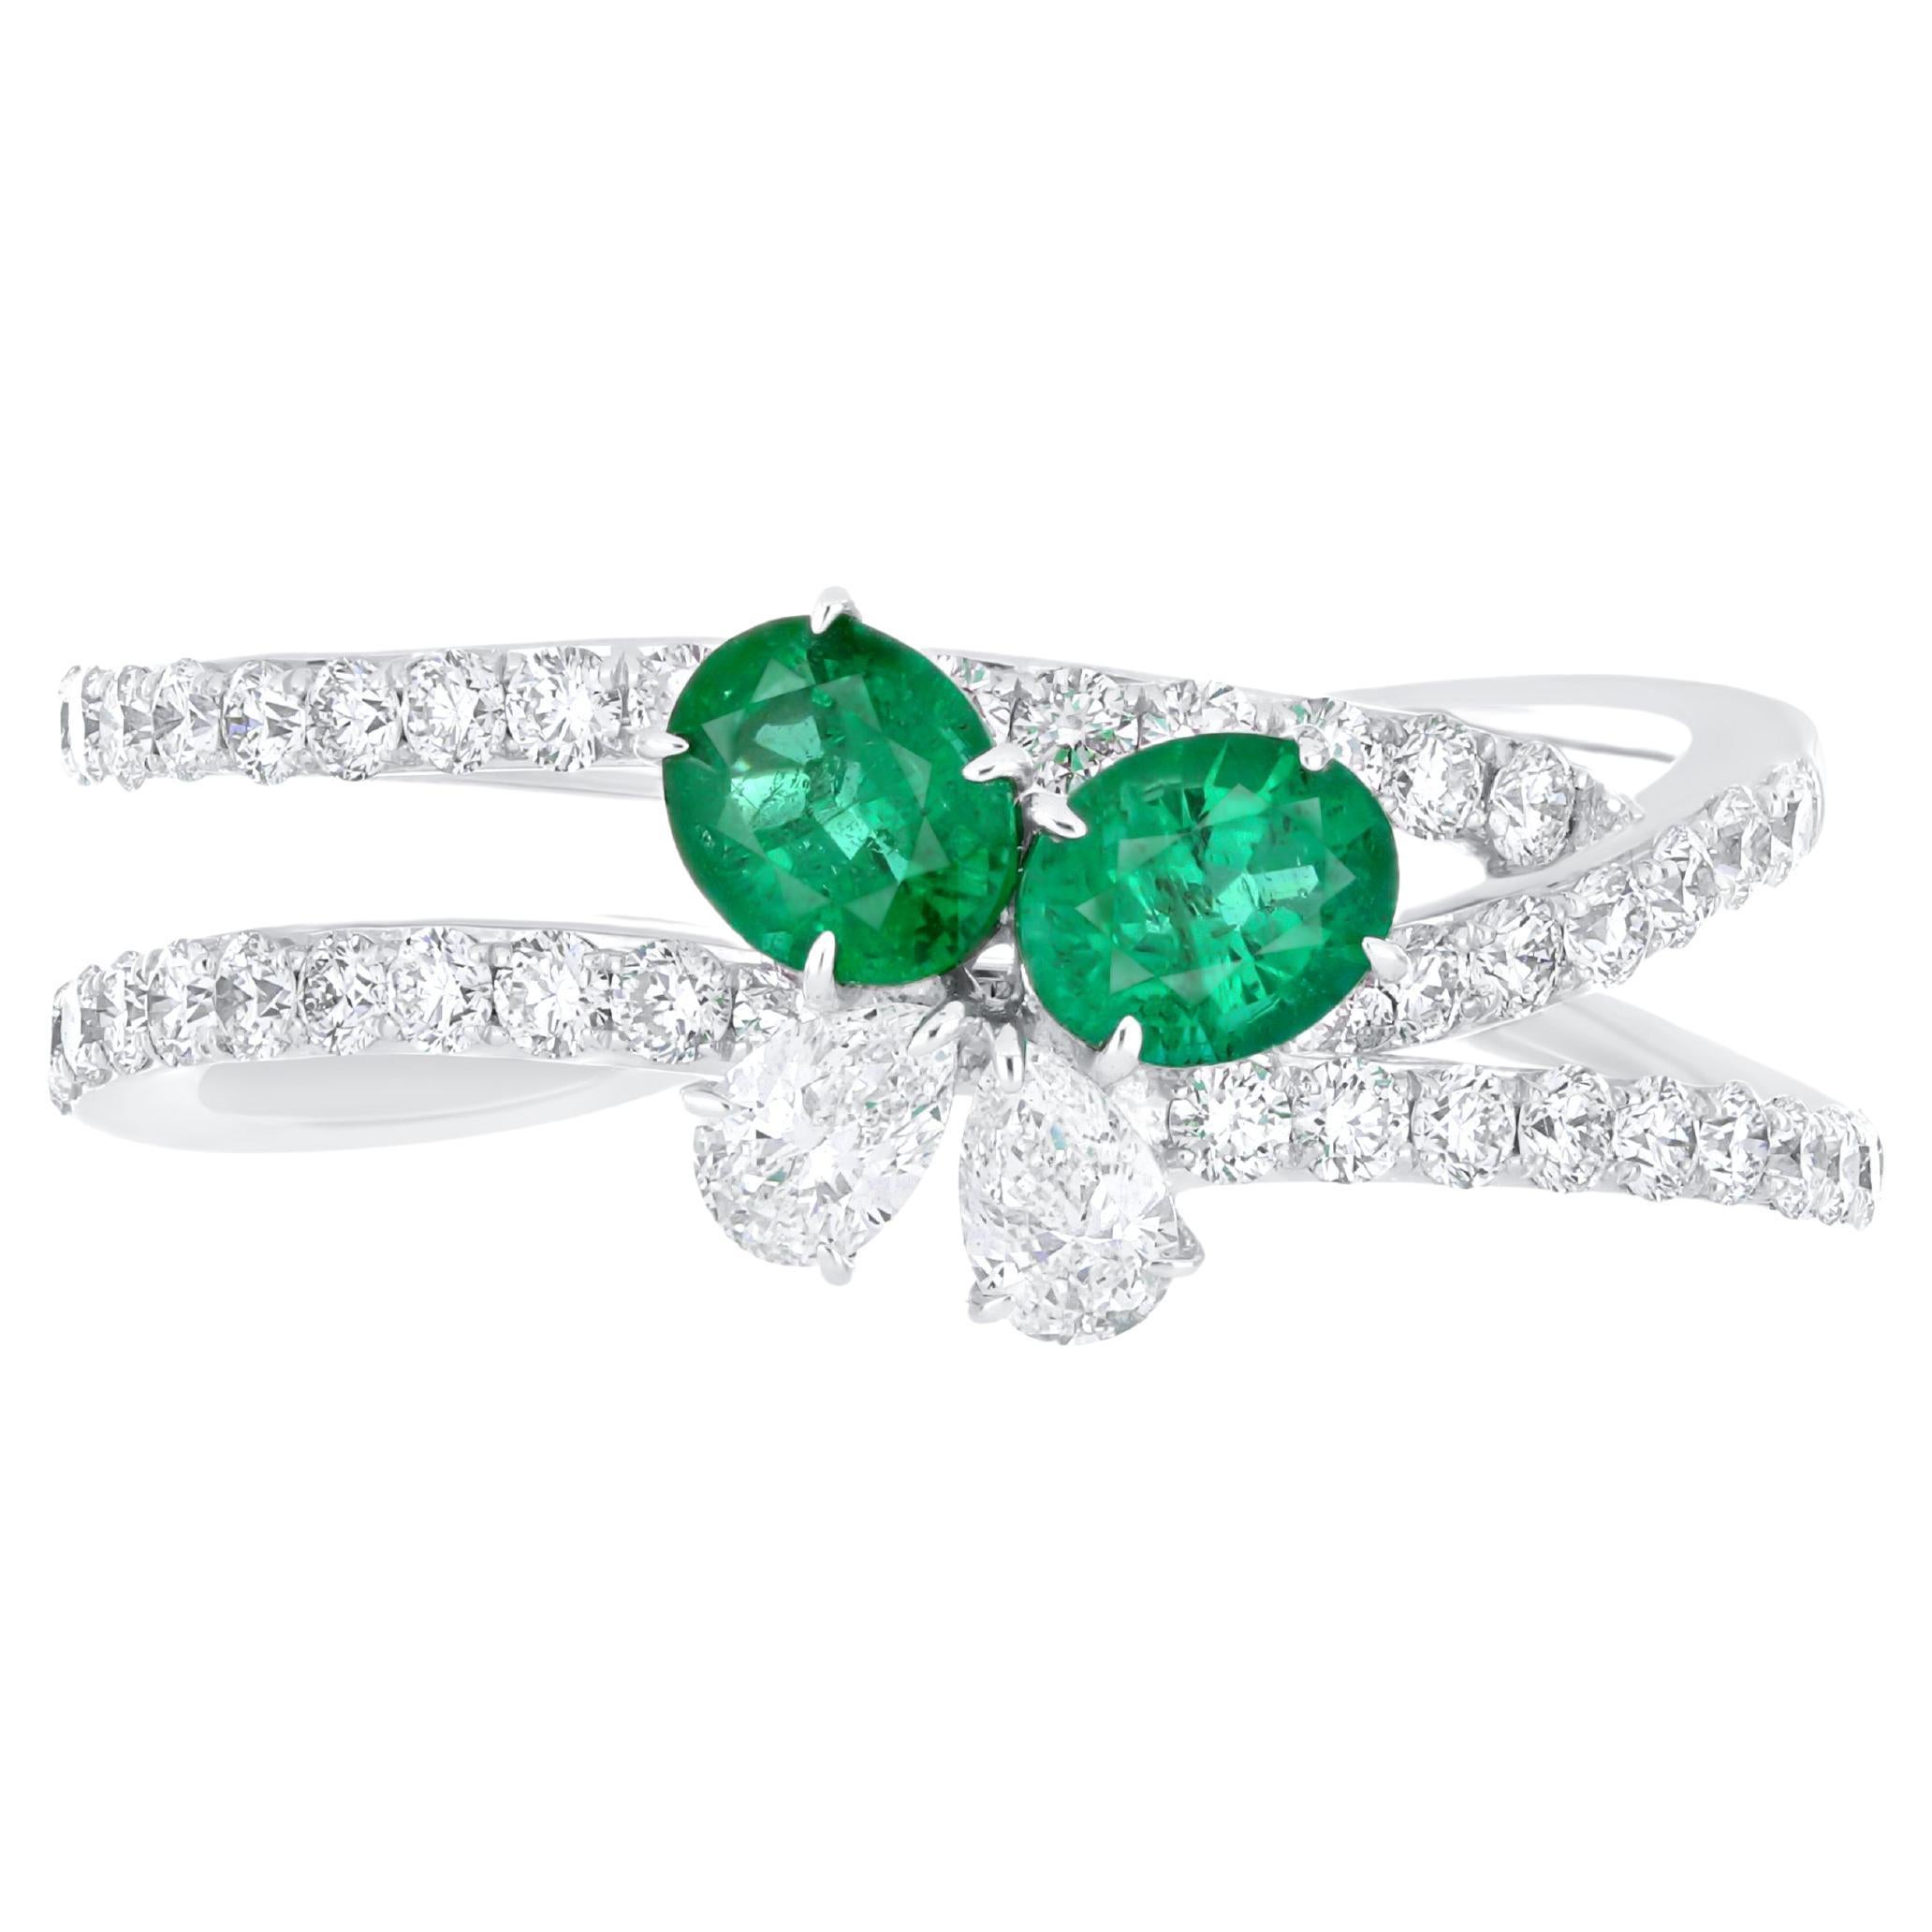 Emerald and Diamond Ring 18 Karat White Gold Fashion jewelry, handcraft Ring